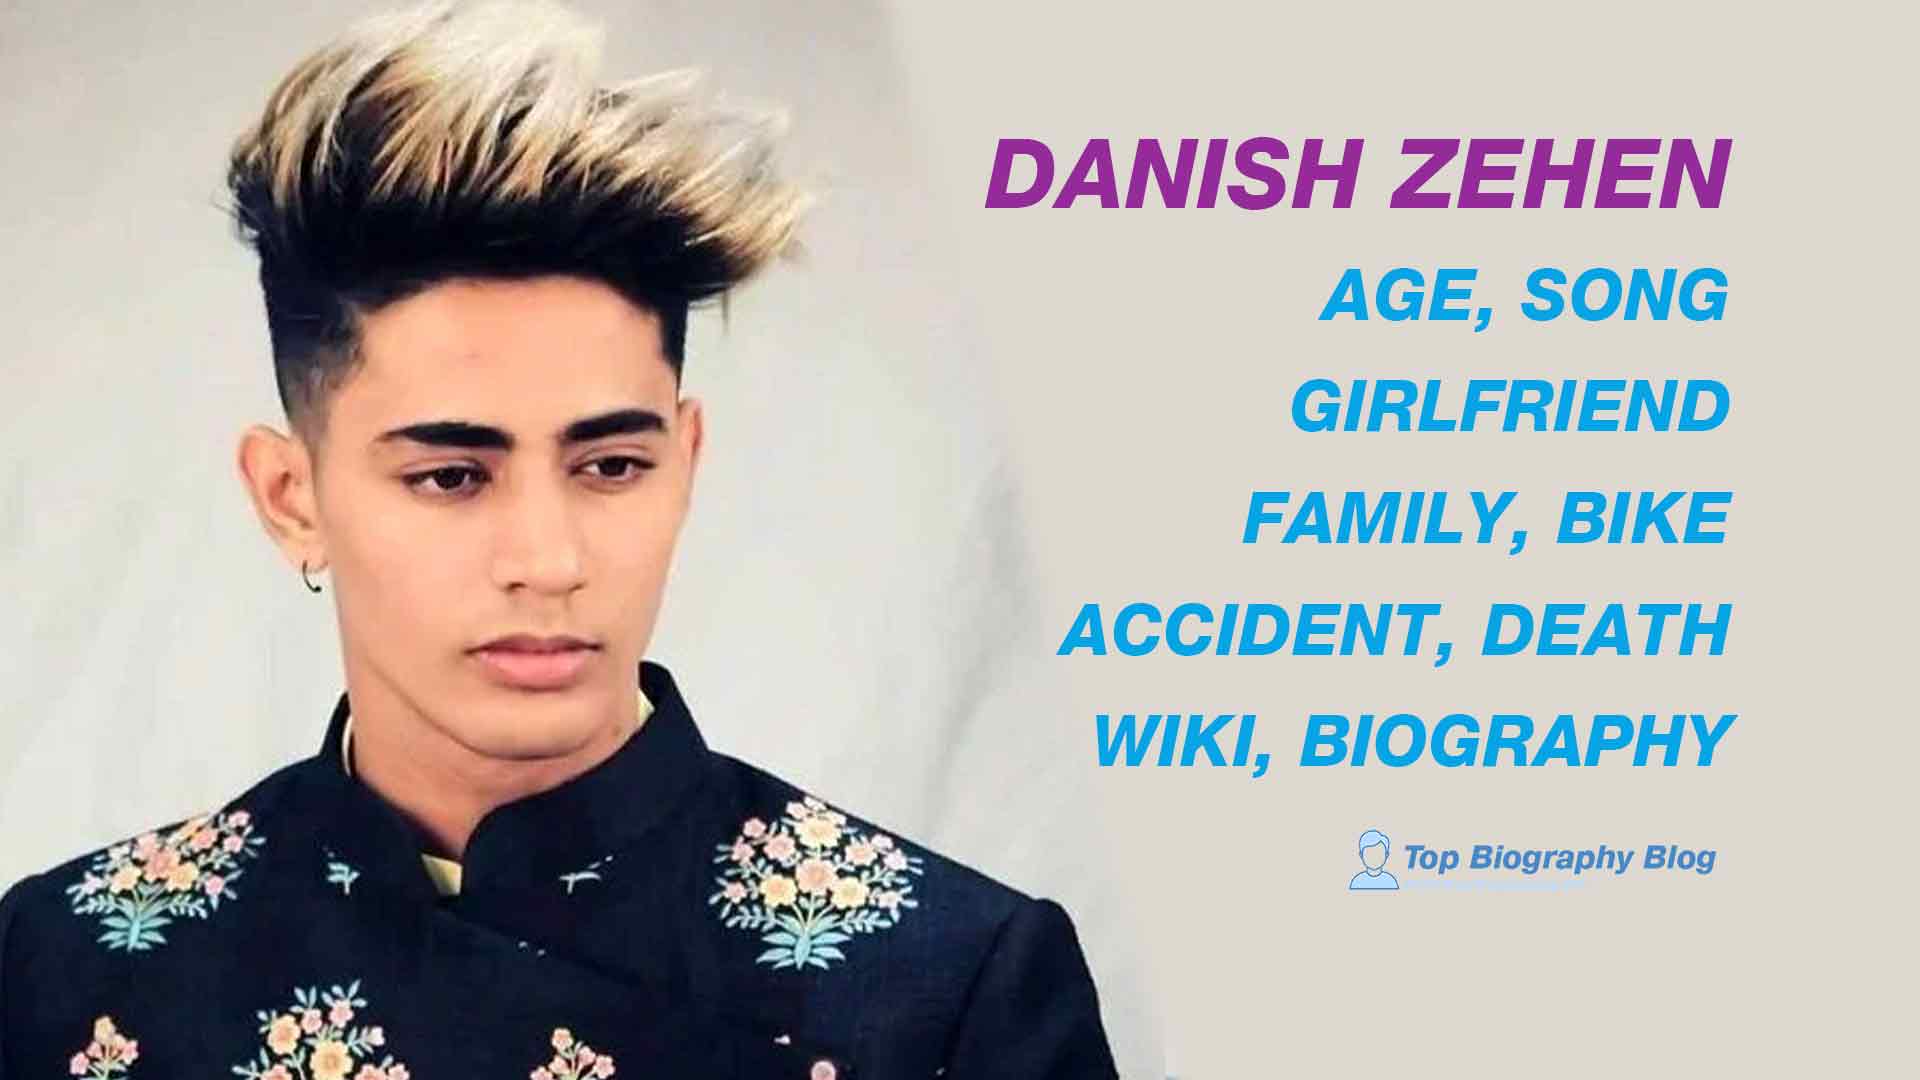 Danish Zehen Biography, Death, Gf, Age, Tattoo, Accident